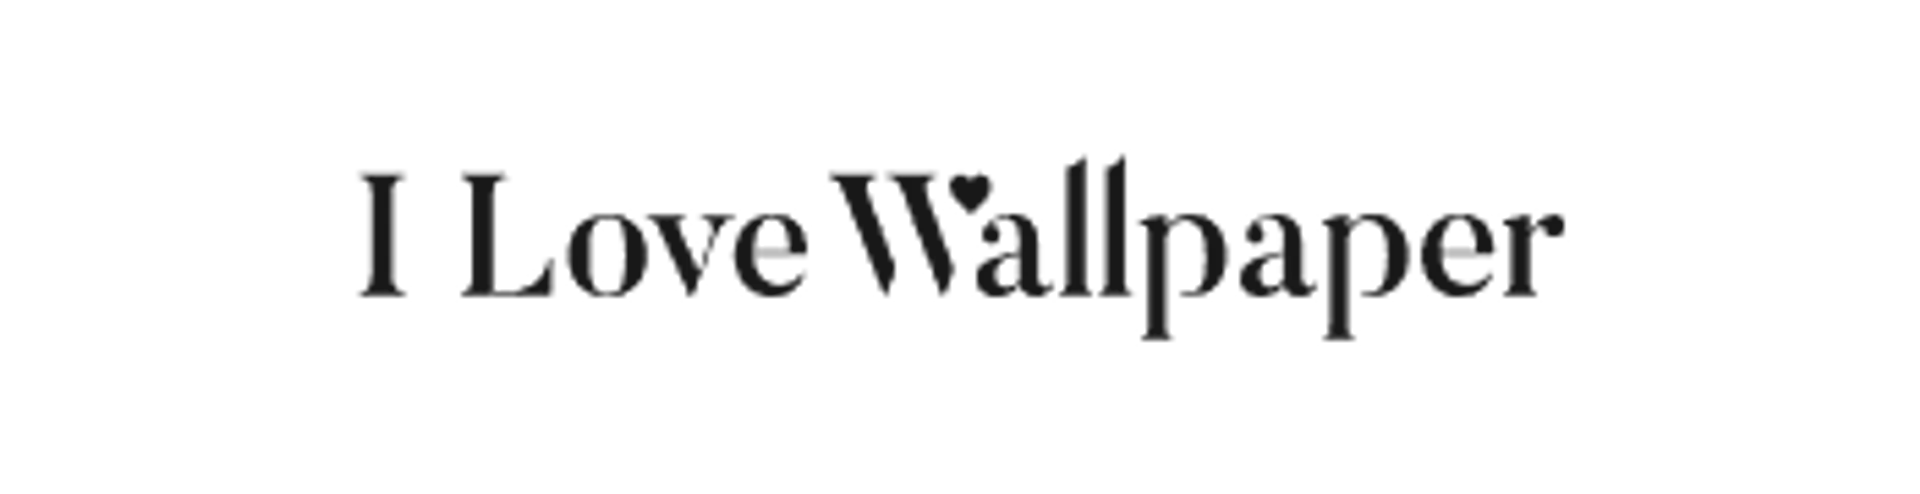 I LOVE WALLPAPER logo